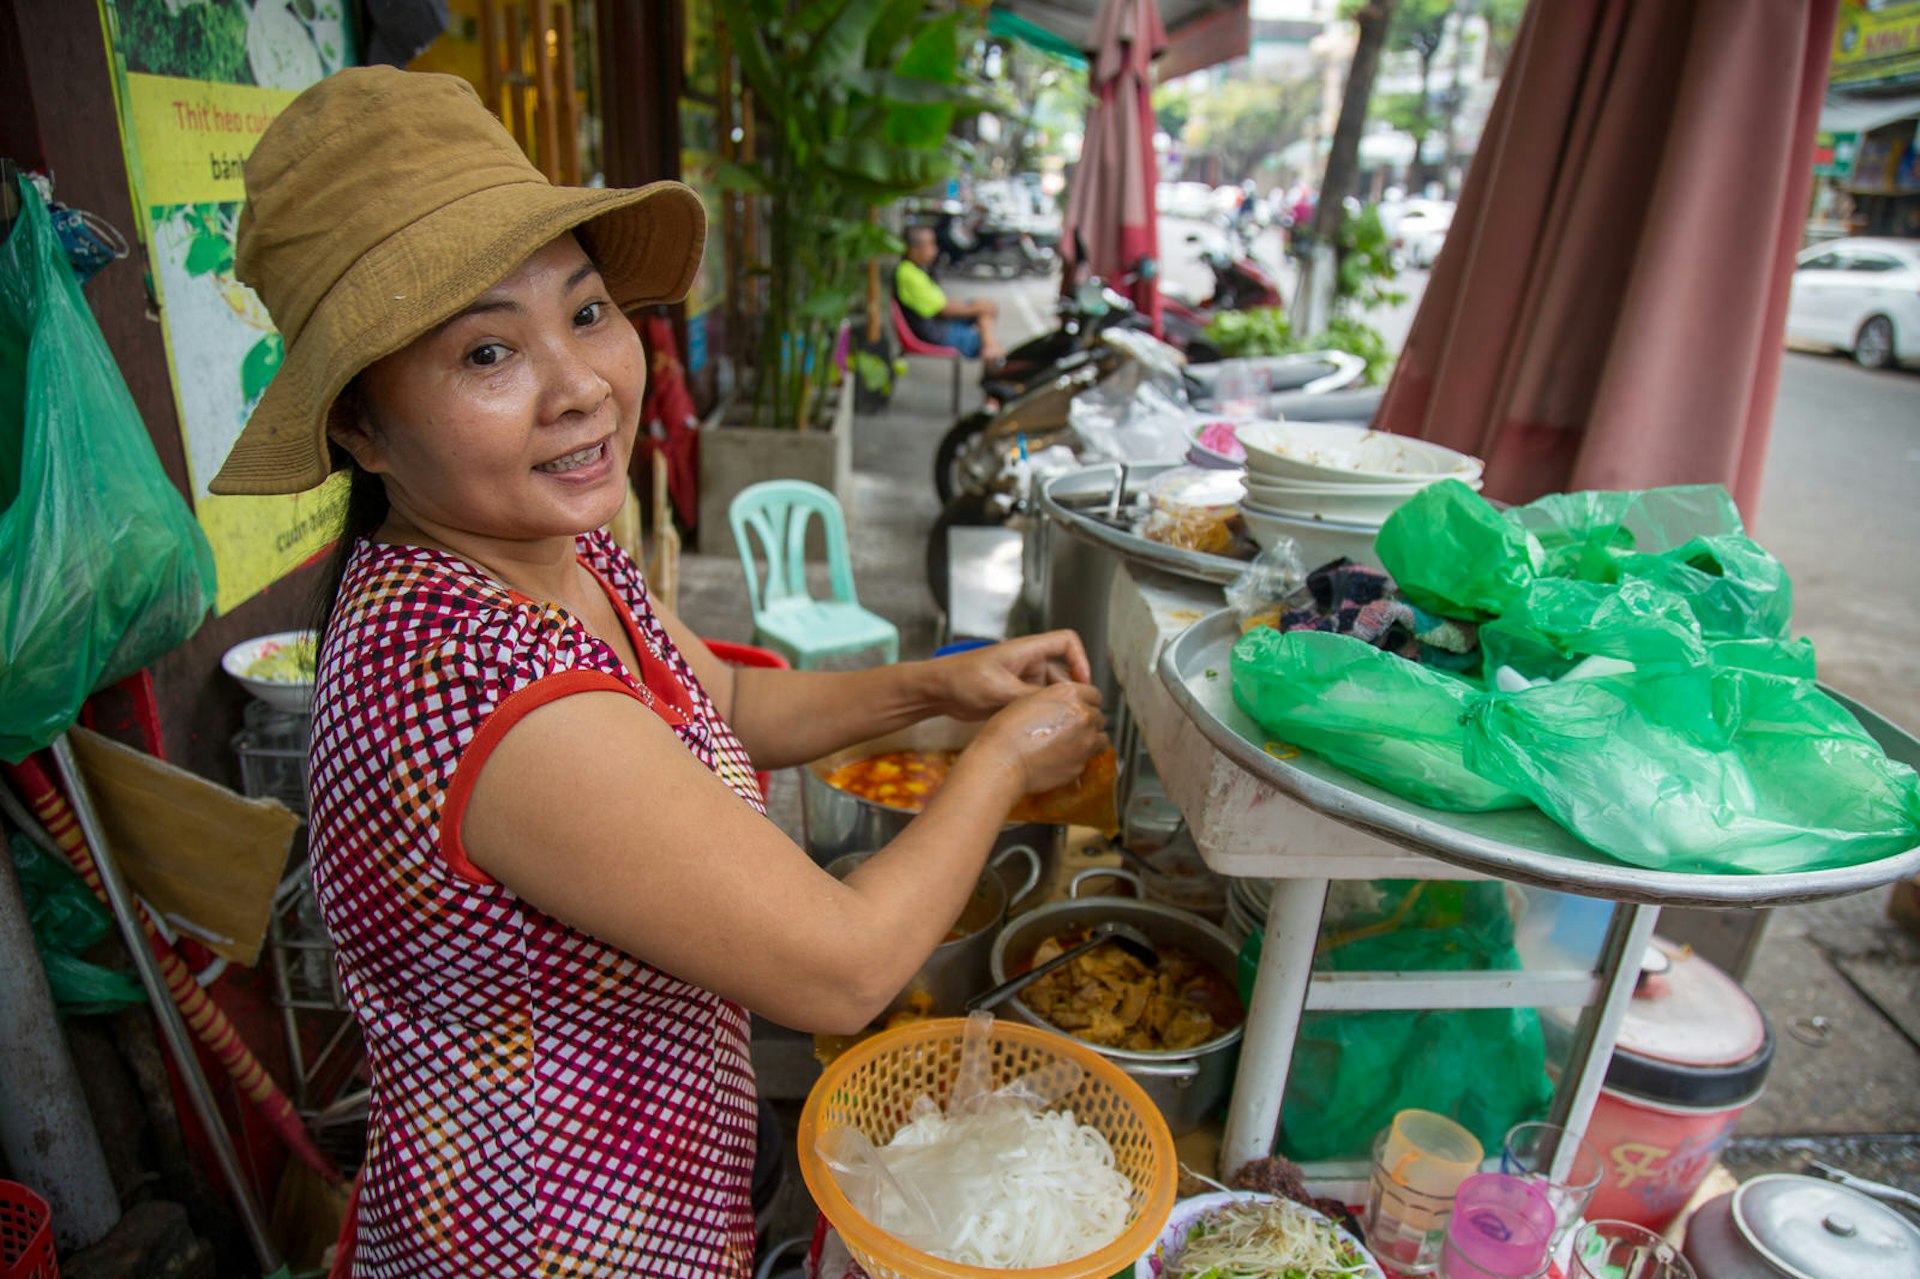 A woman making mi quang noodles smiles at the camera